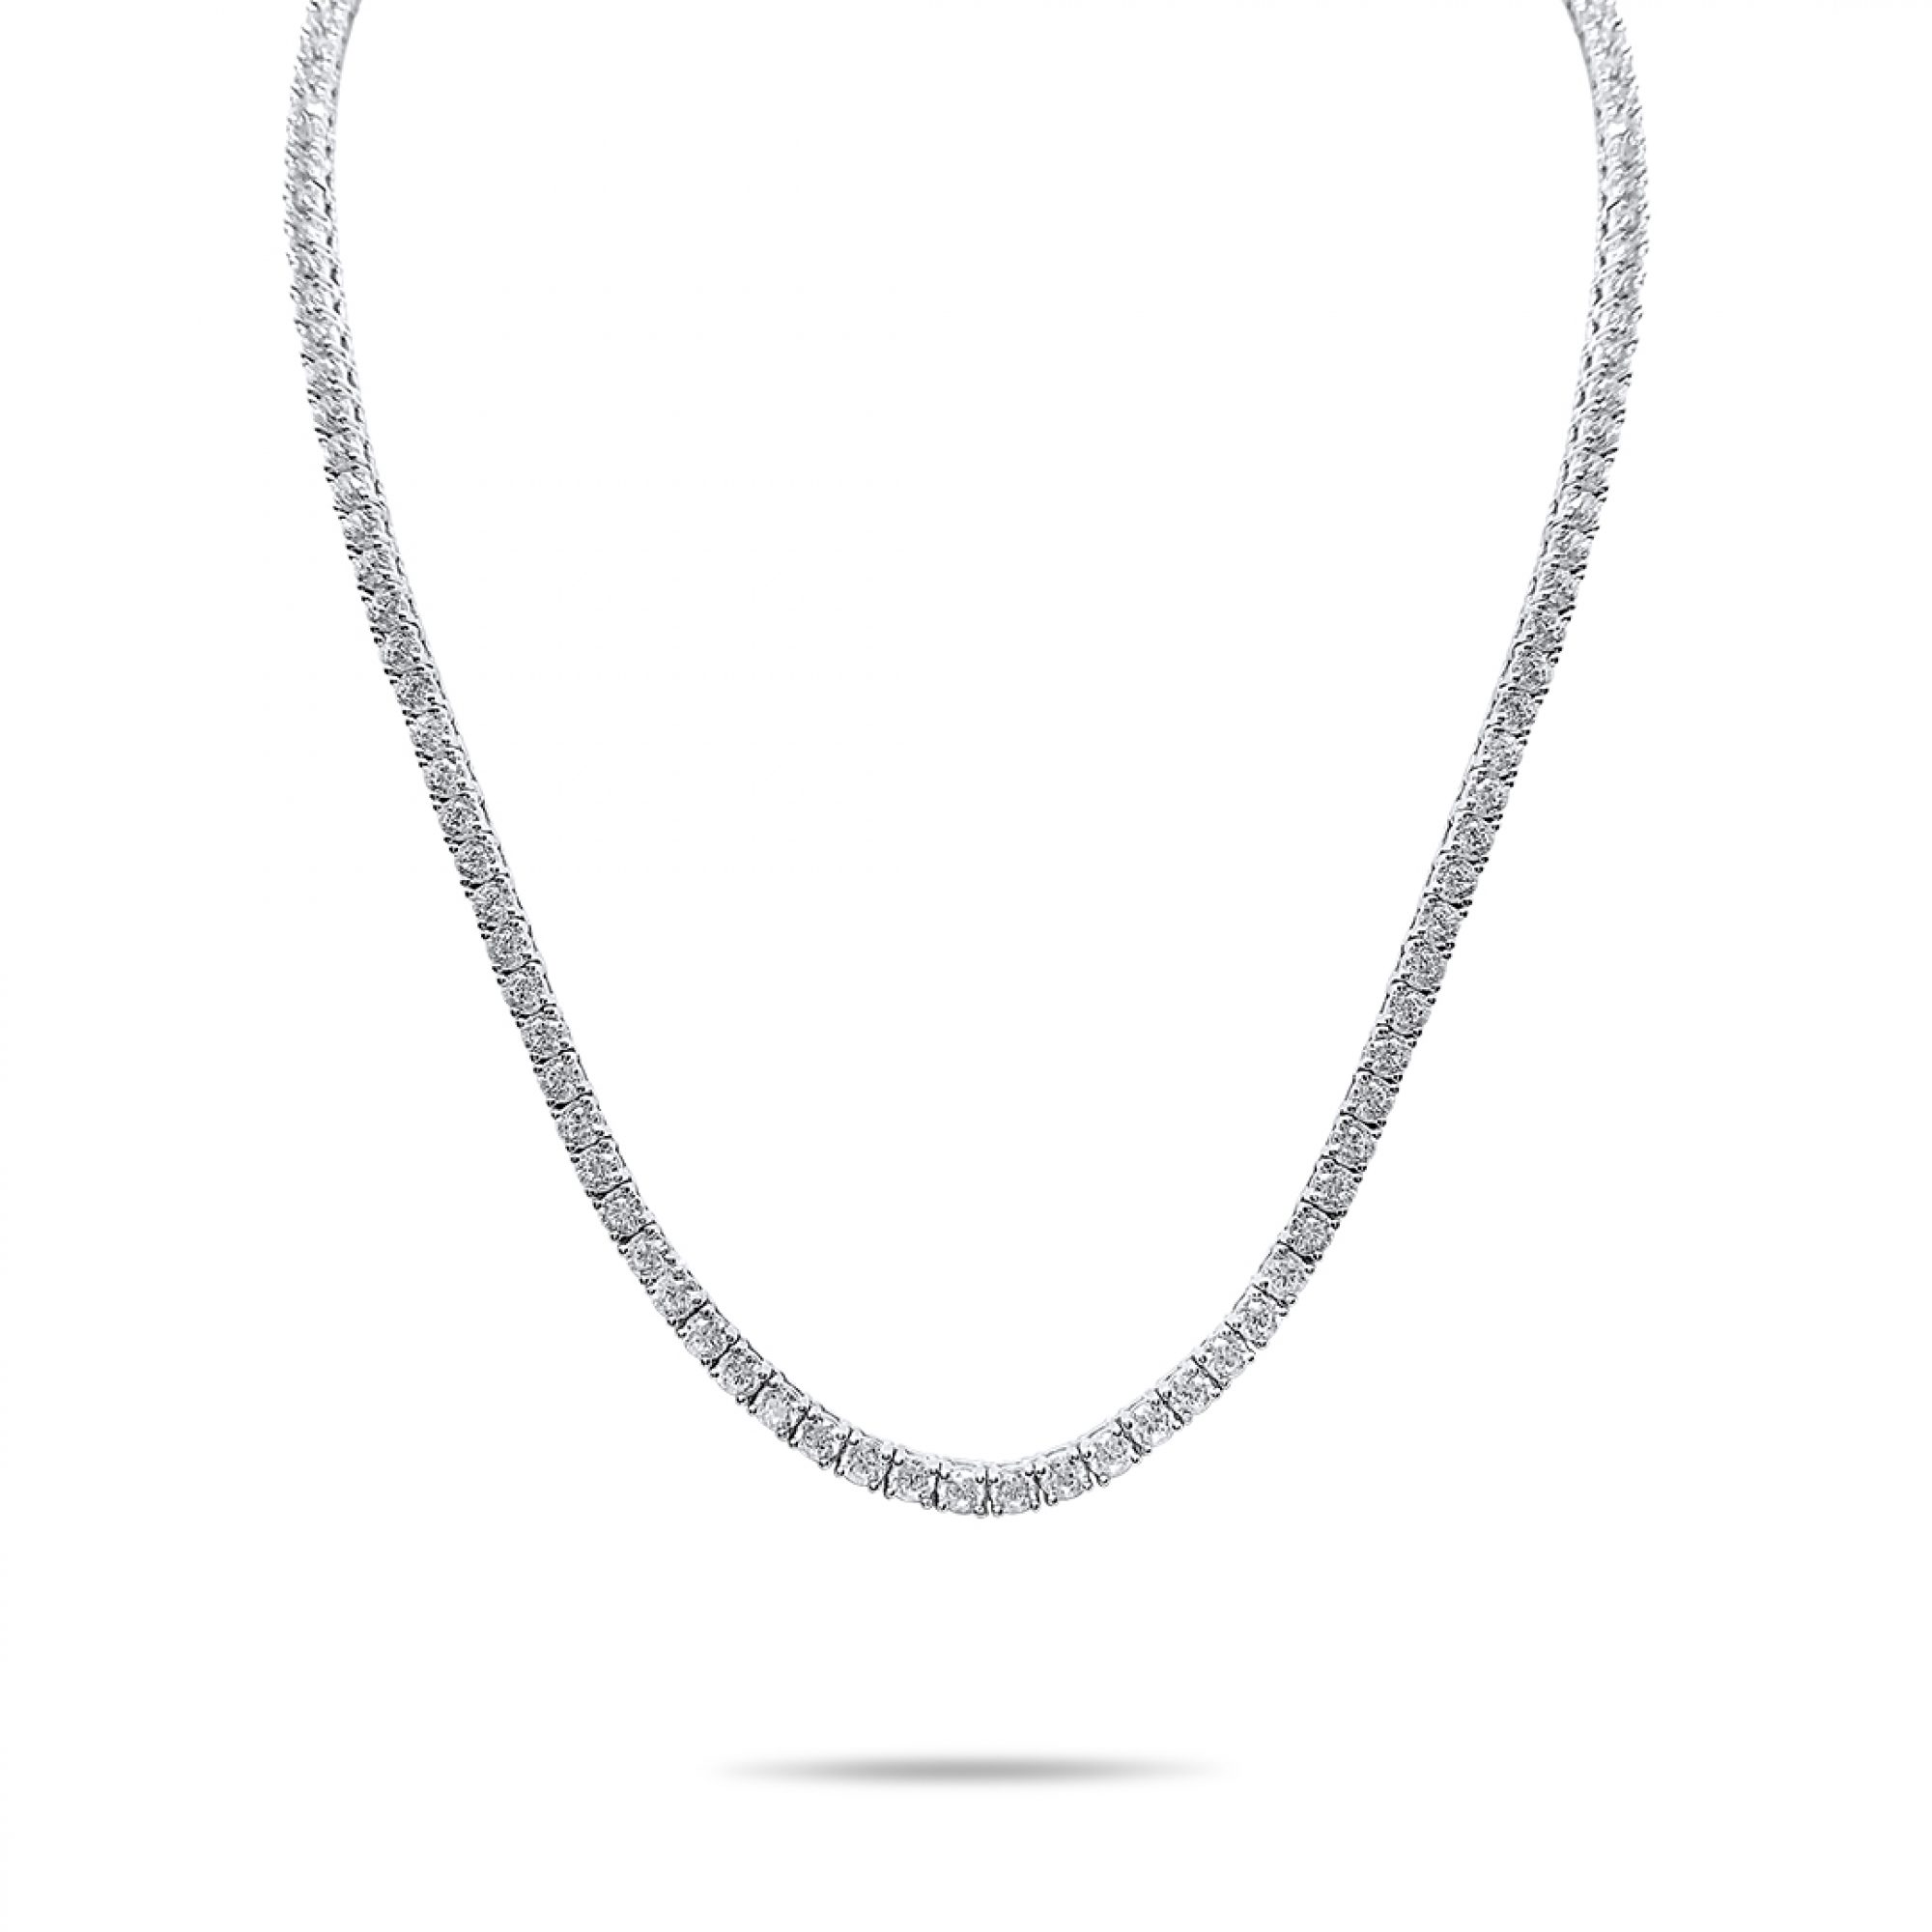 Silver necklace with zircon stones